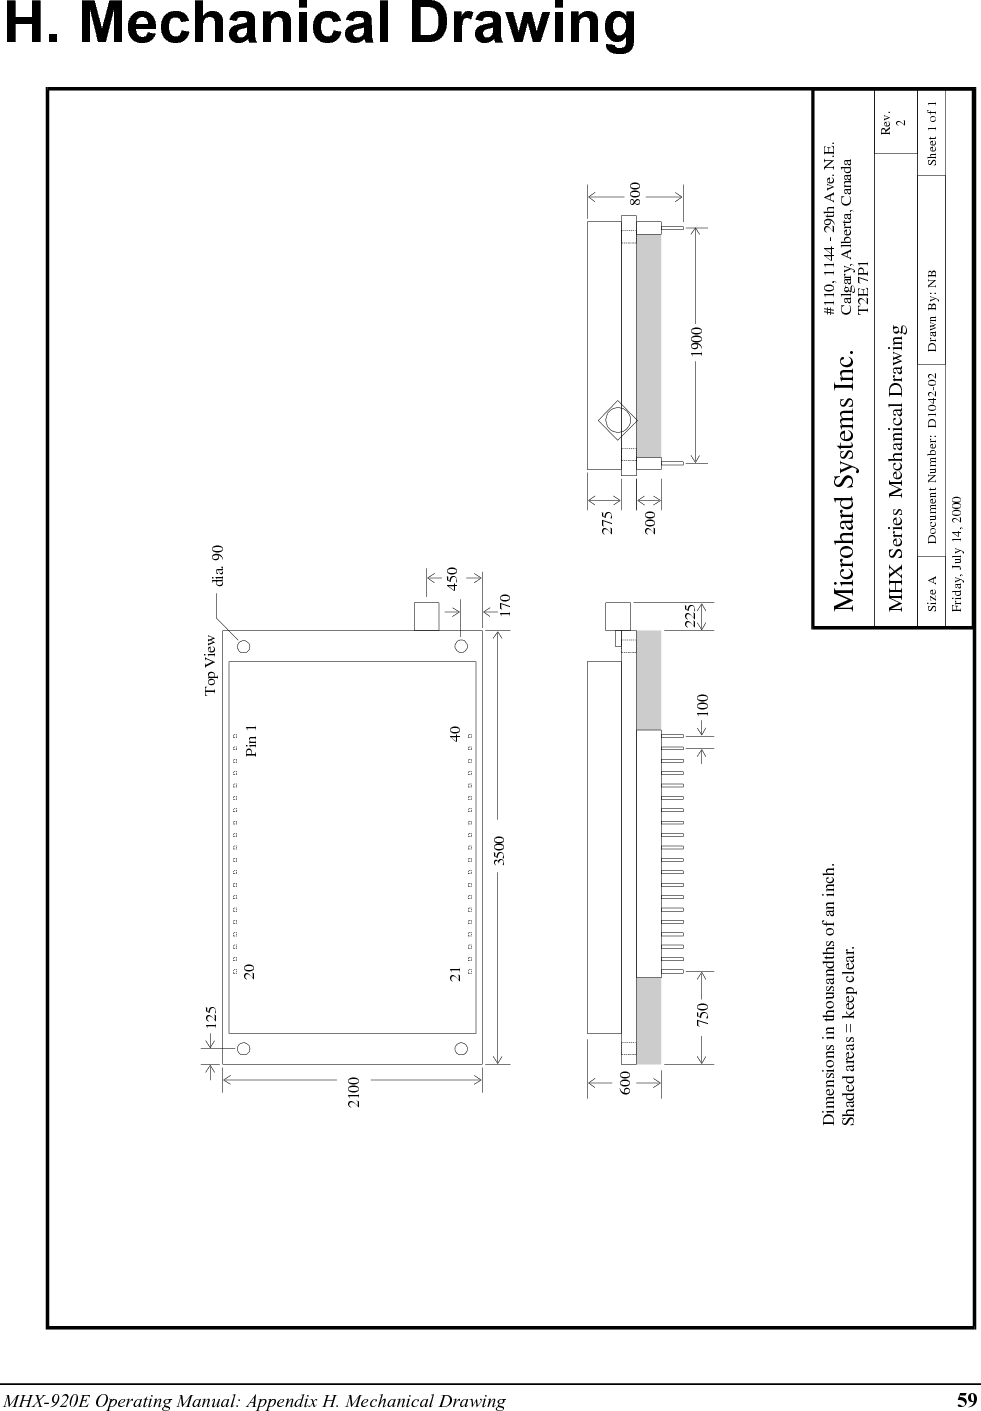 60 MHX-920E Operating Manual: Appendix H. Mechanical Drawings